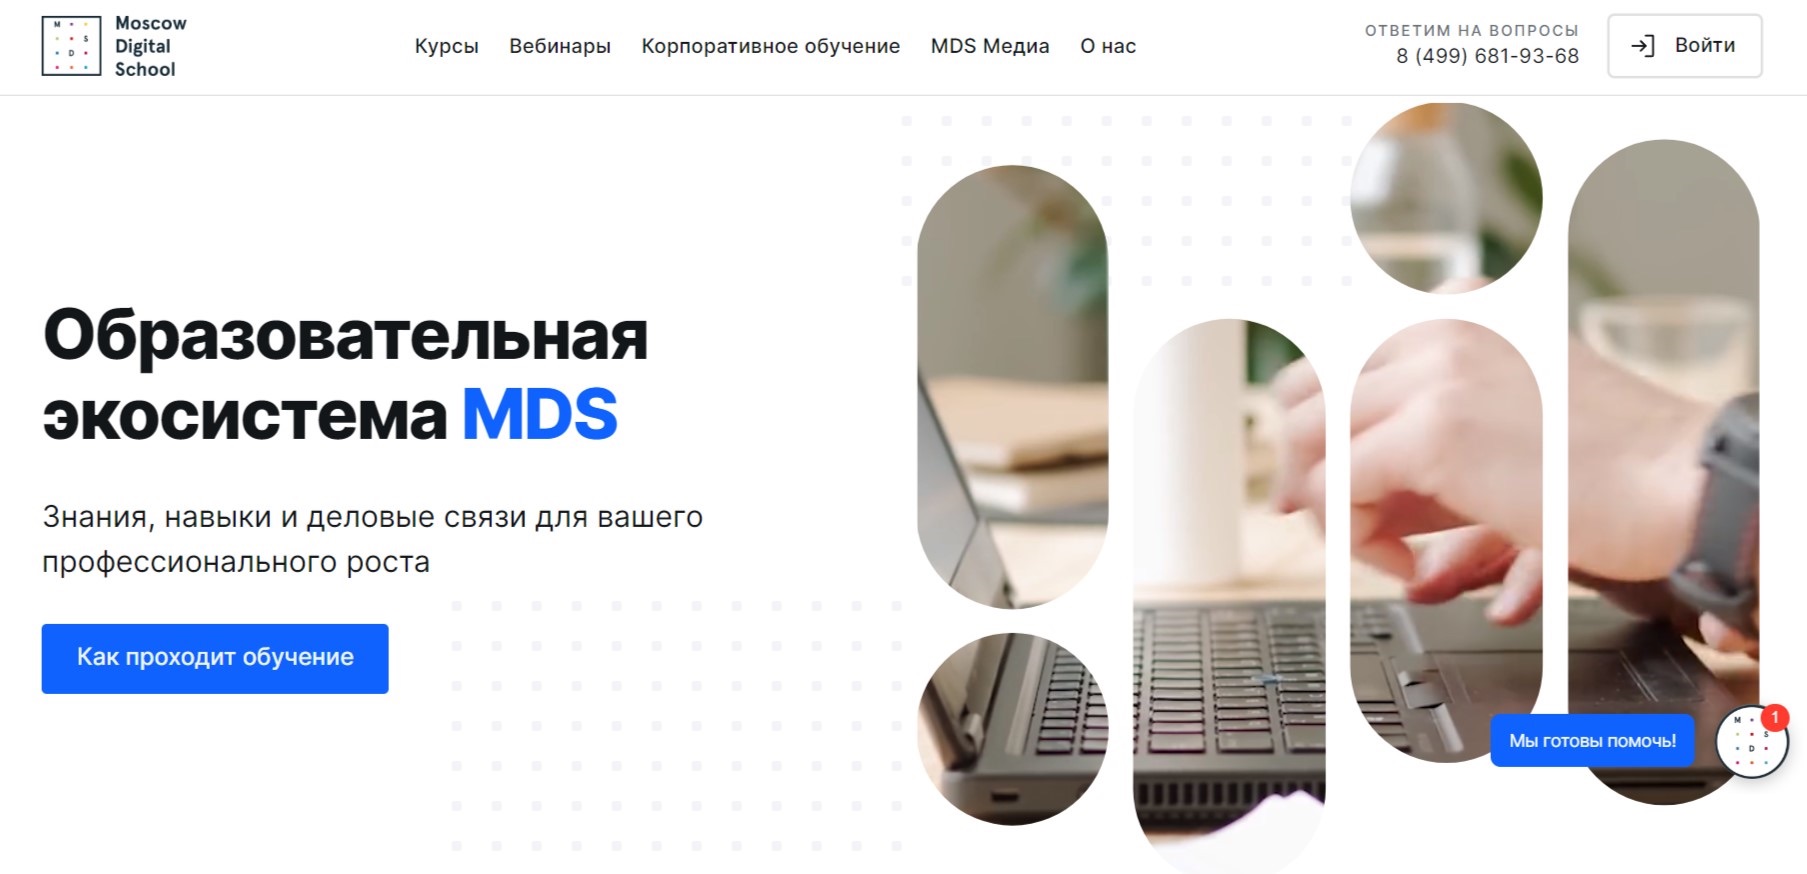 Сайт Moscow digital school